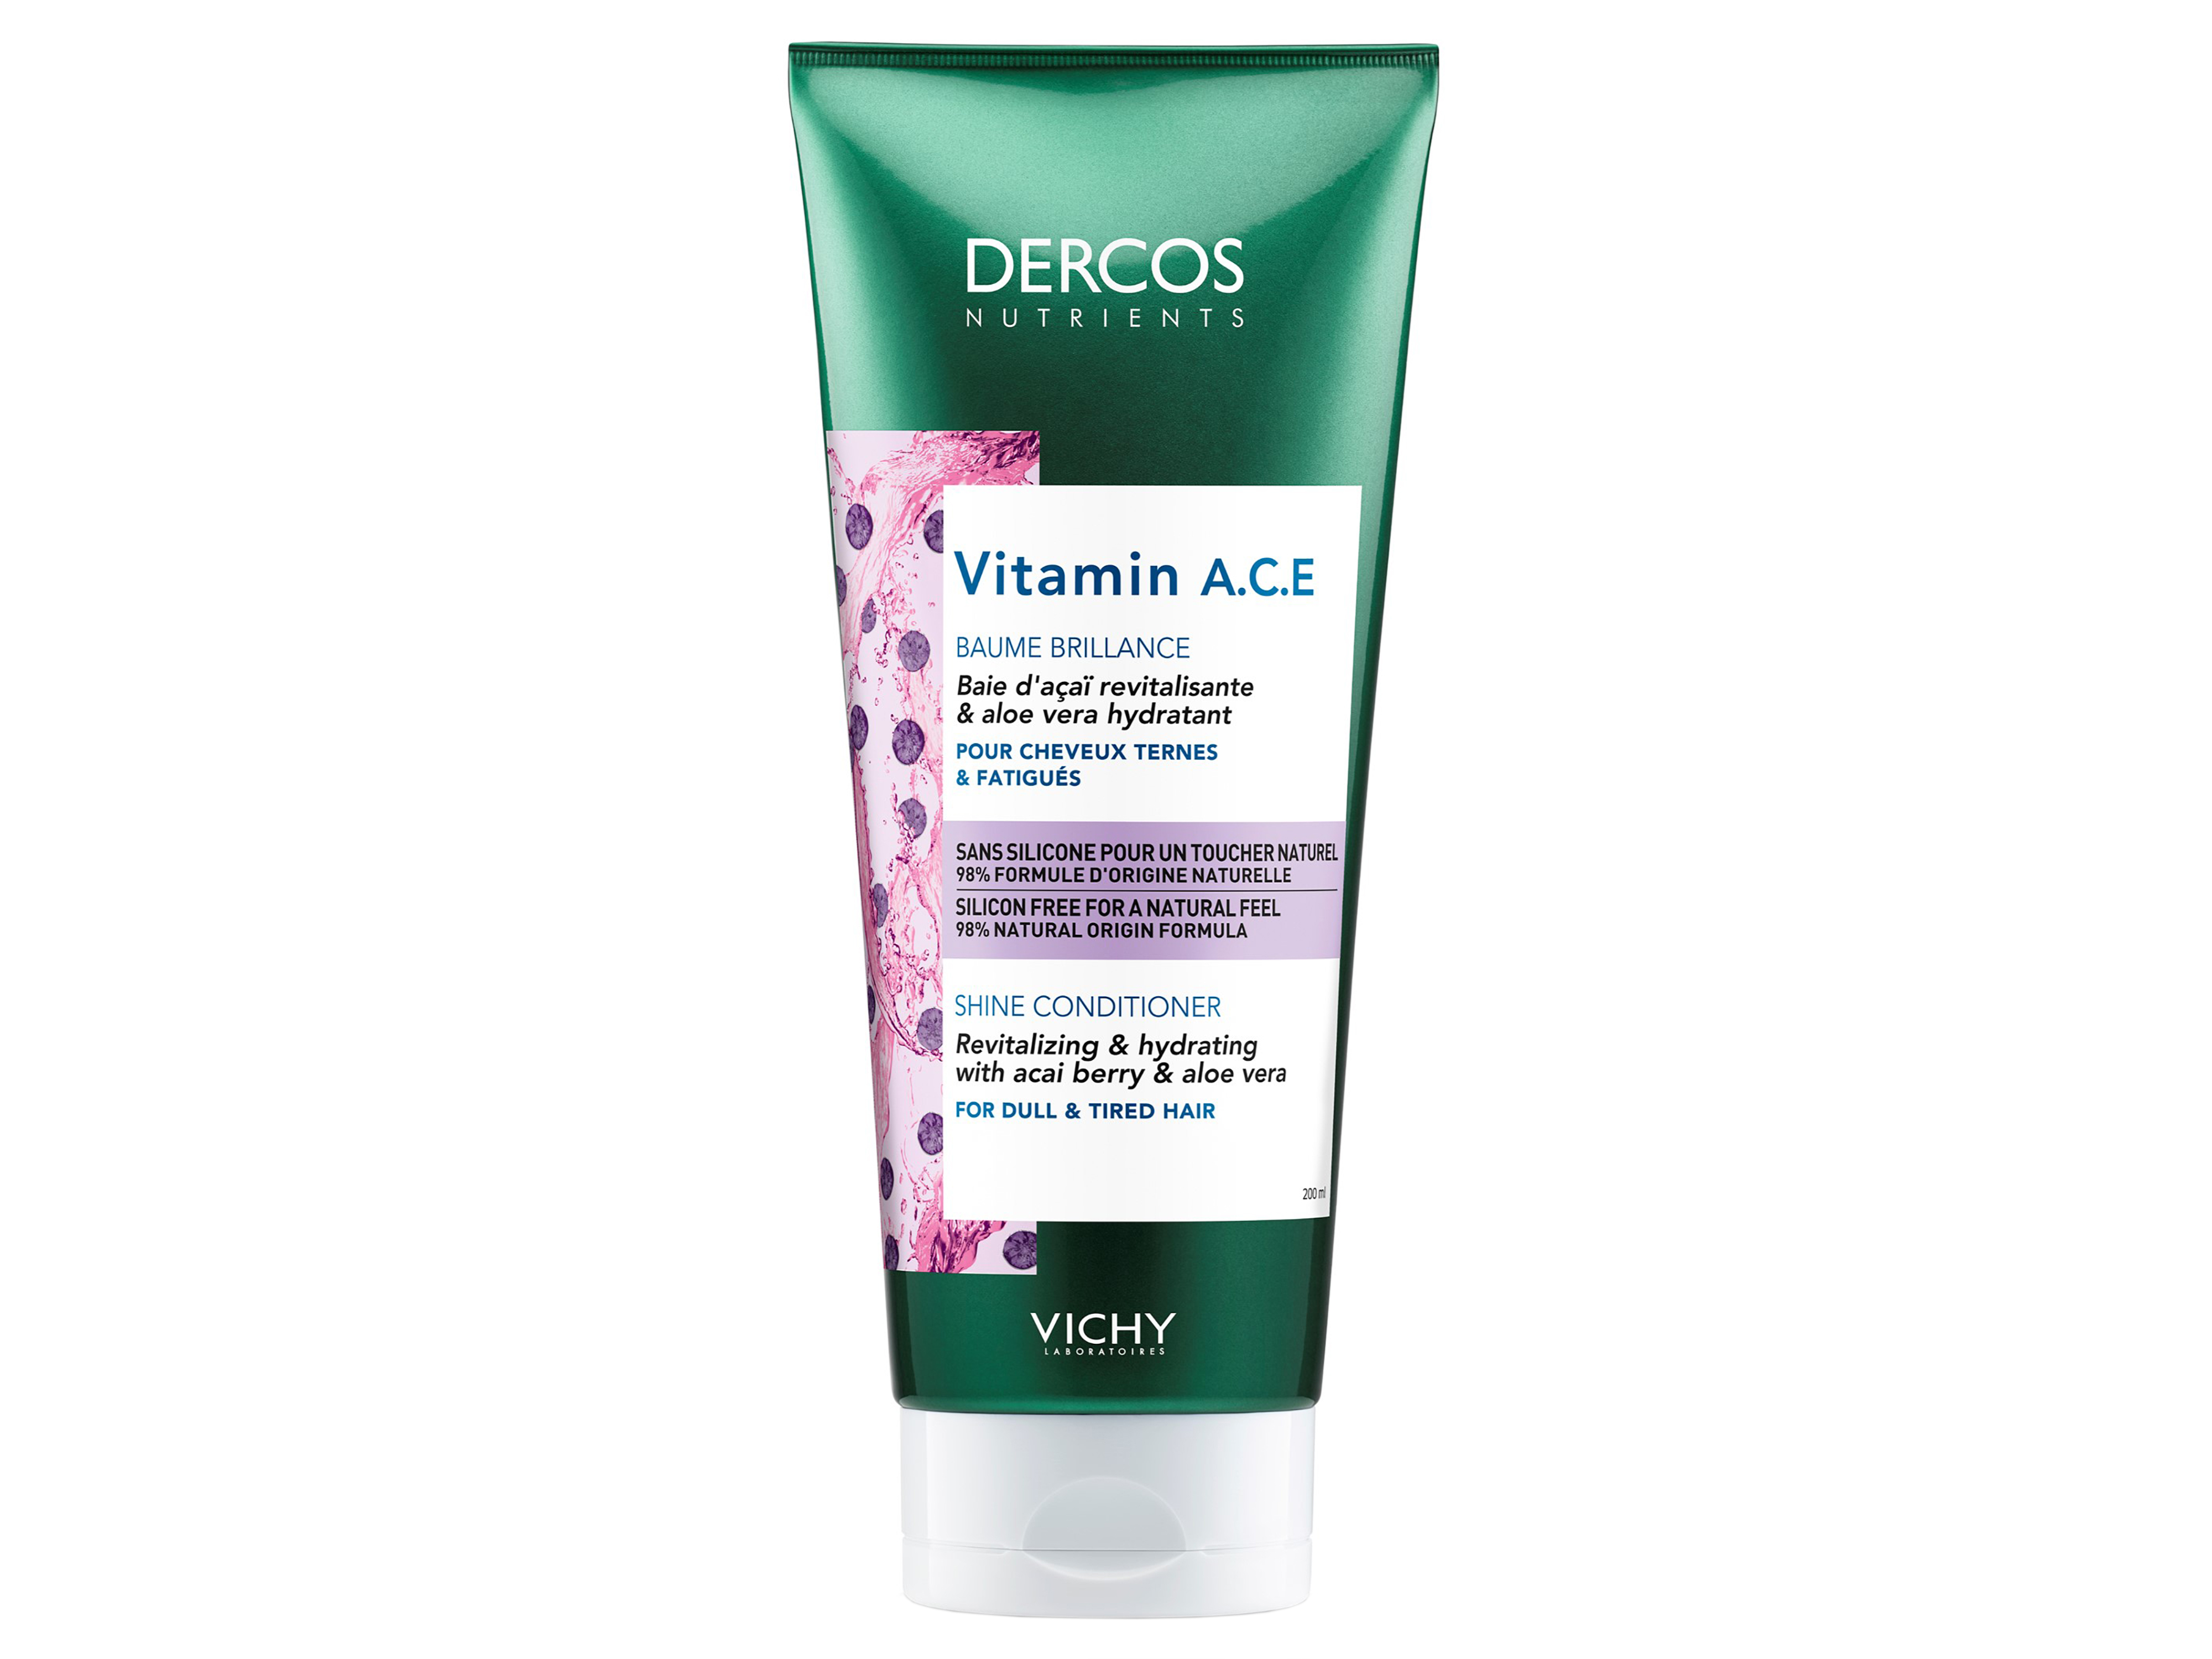 Vichy Dercos Nutrients Vitamin A.C.E Shine Conditioner, 200 ml